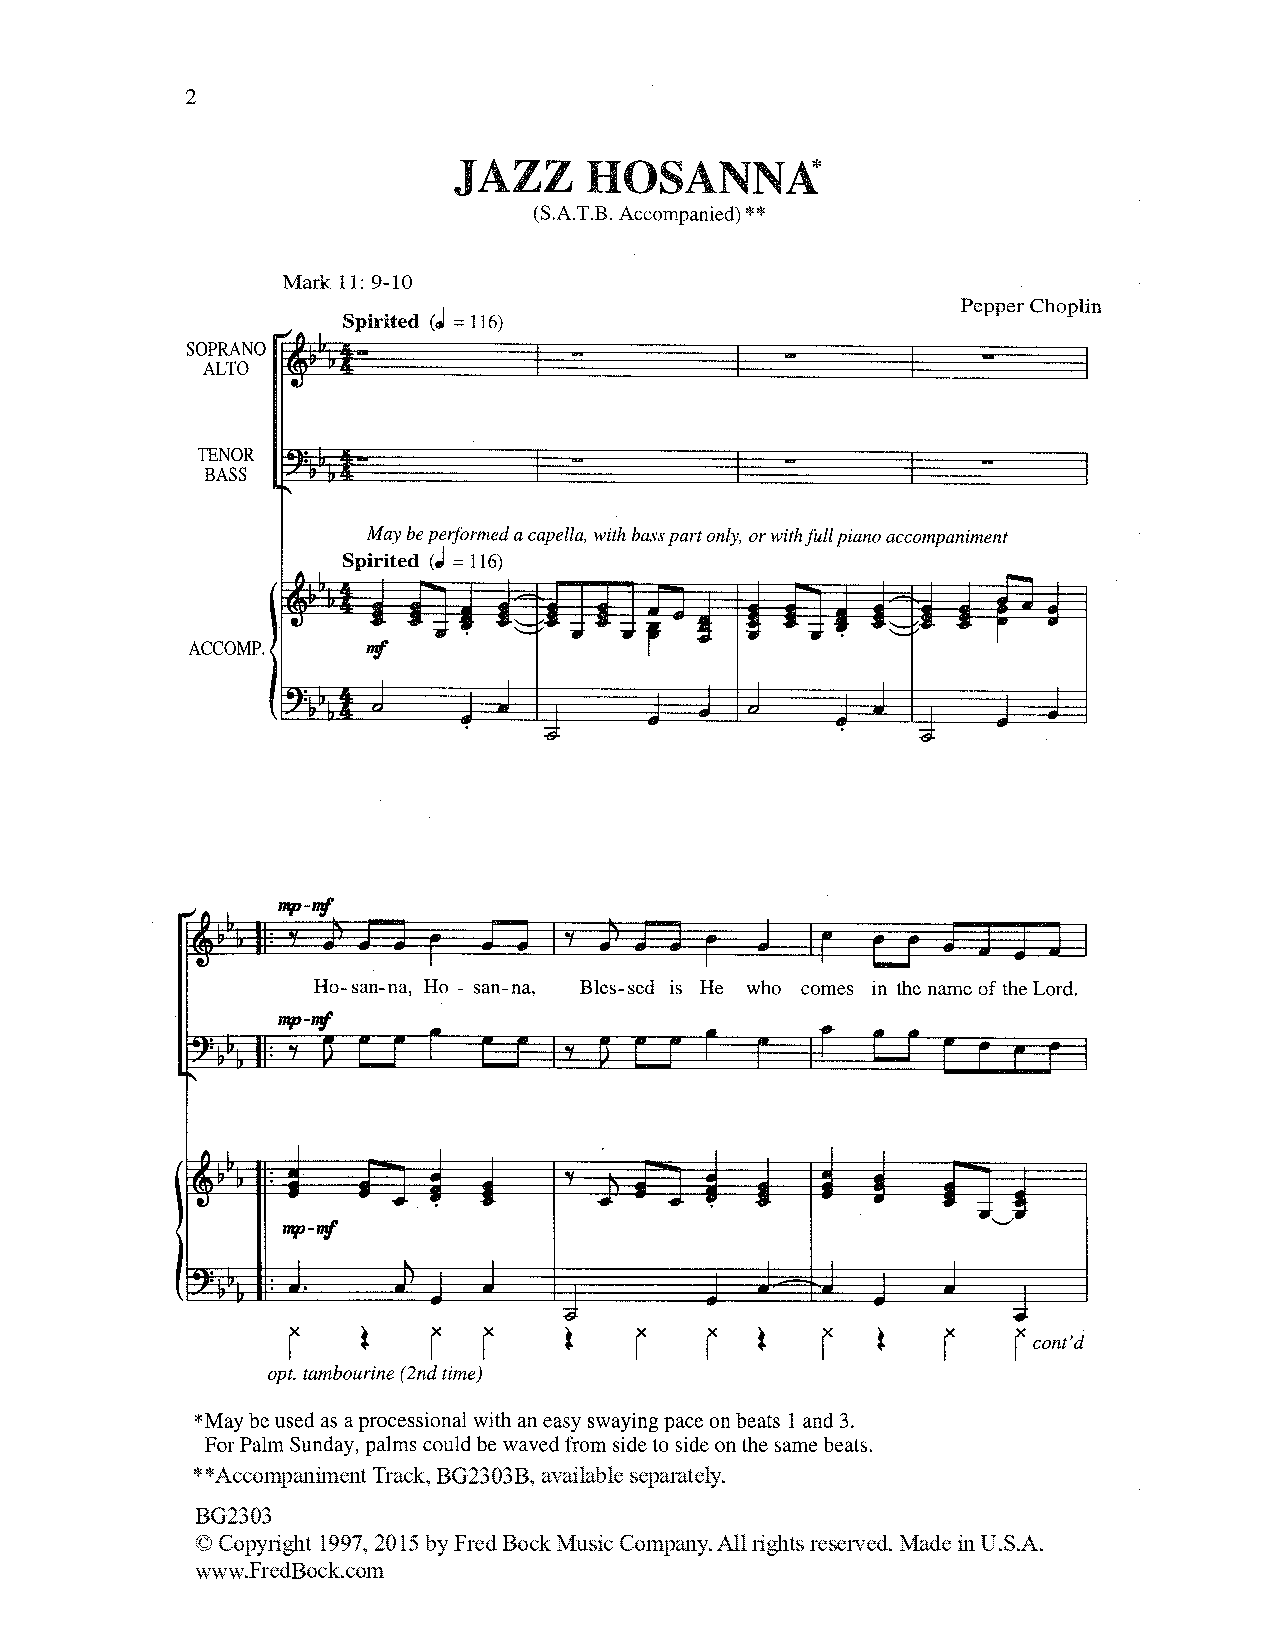 Download Pepper Choplin Jazz Hosanna Sheet Music and learn how to play SATB Choir PDF digital score in minutes